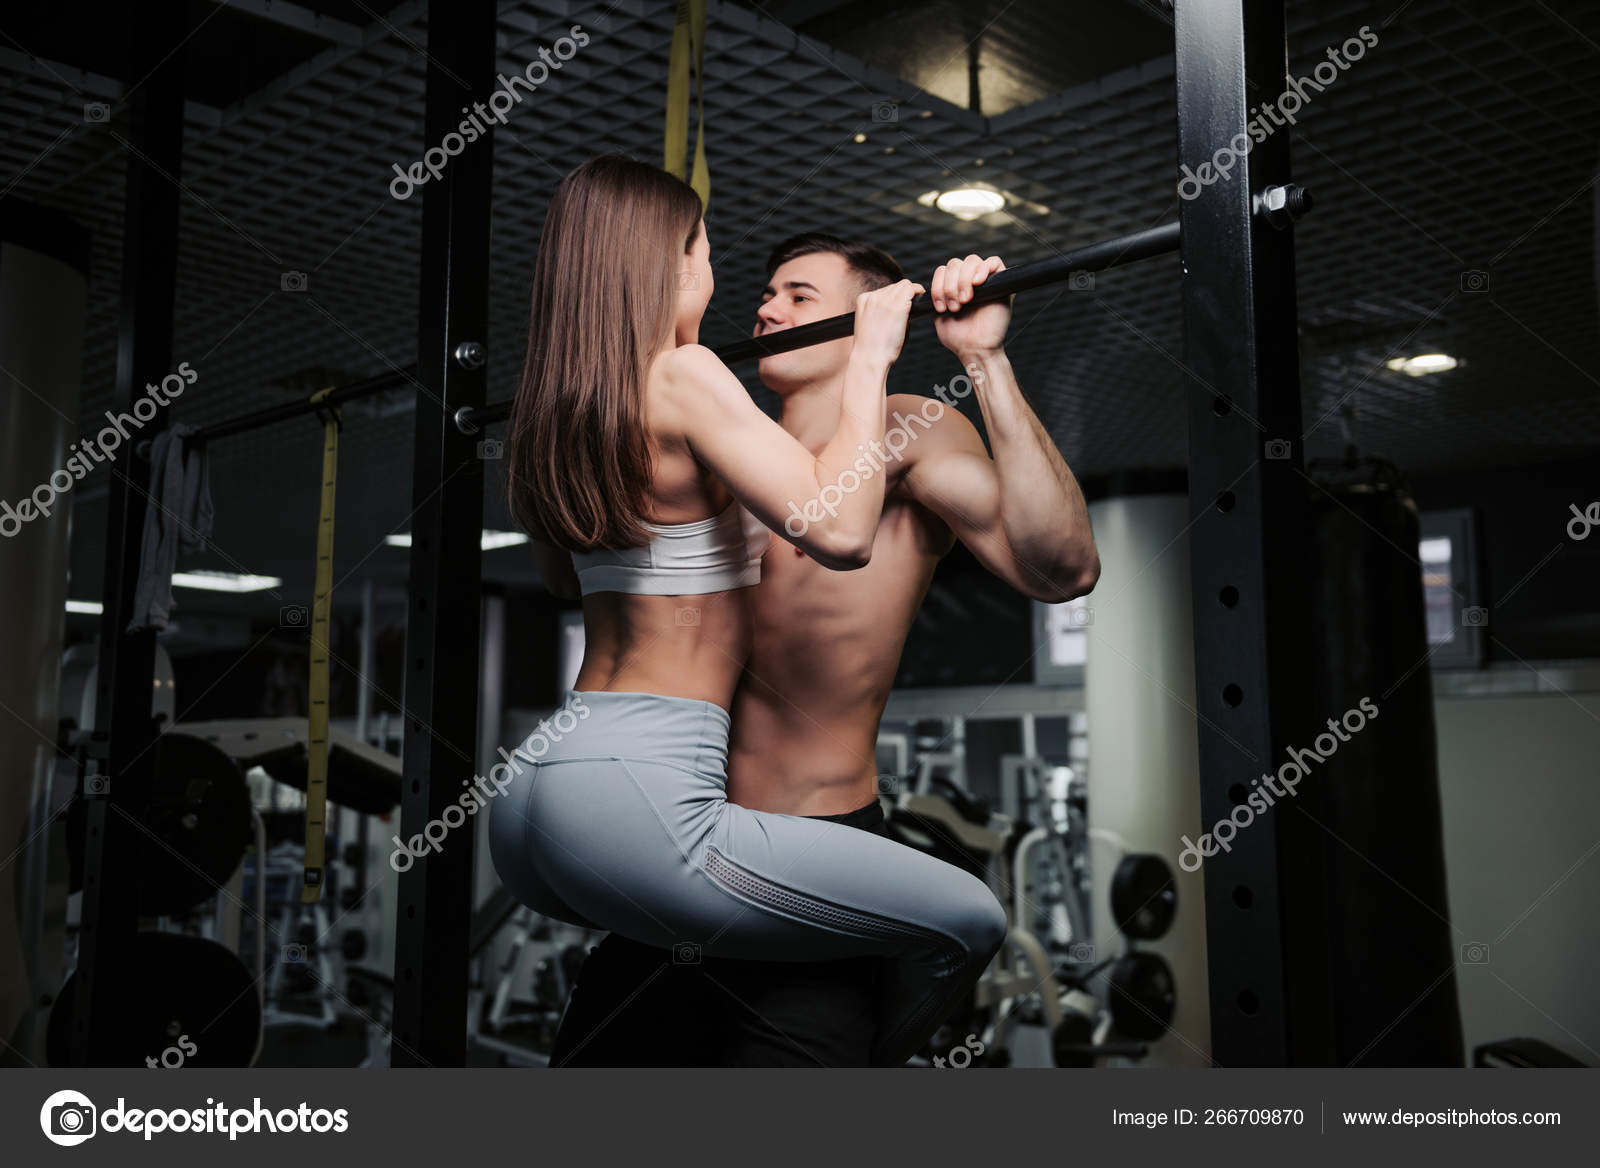 Erotic gym